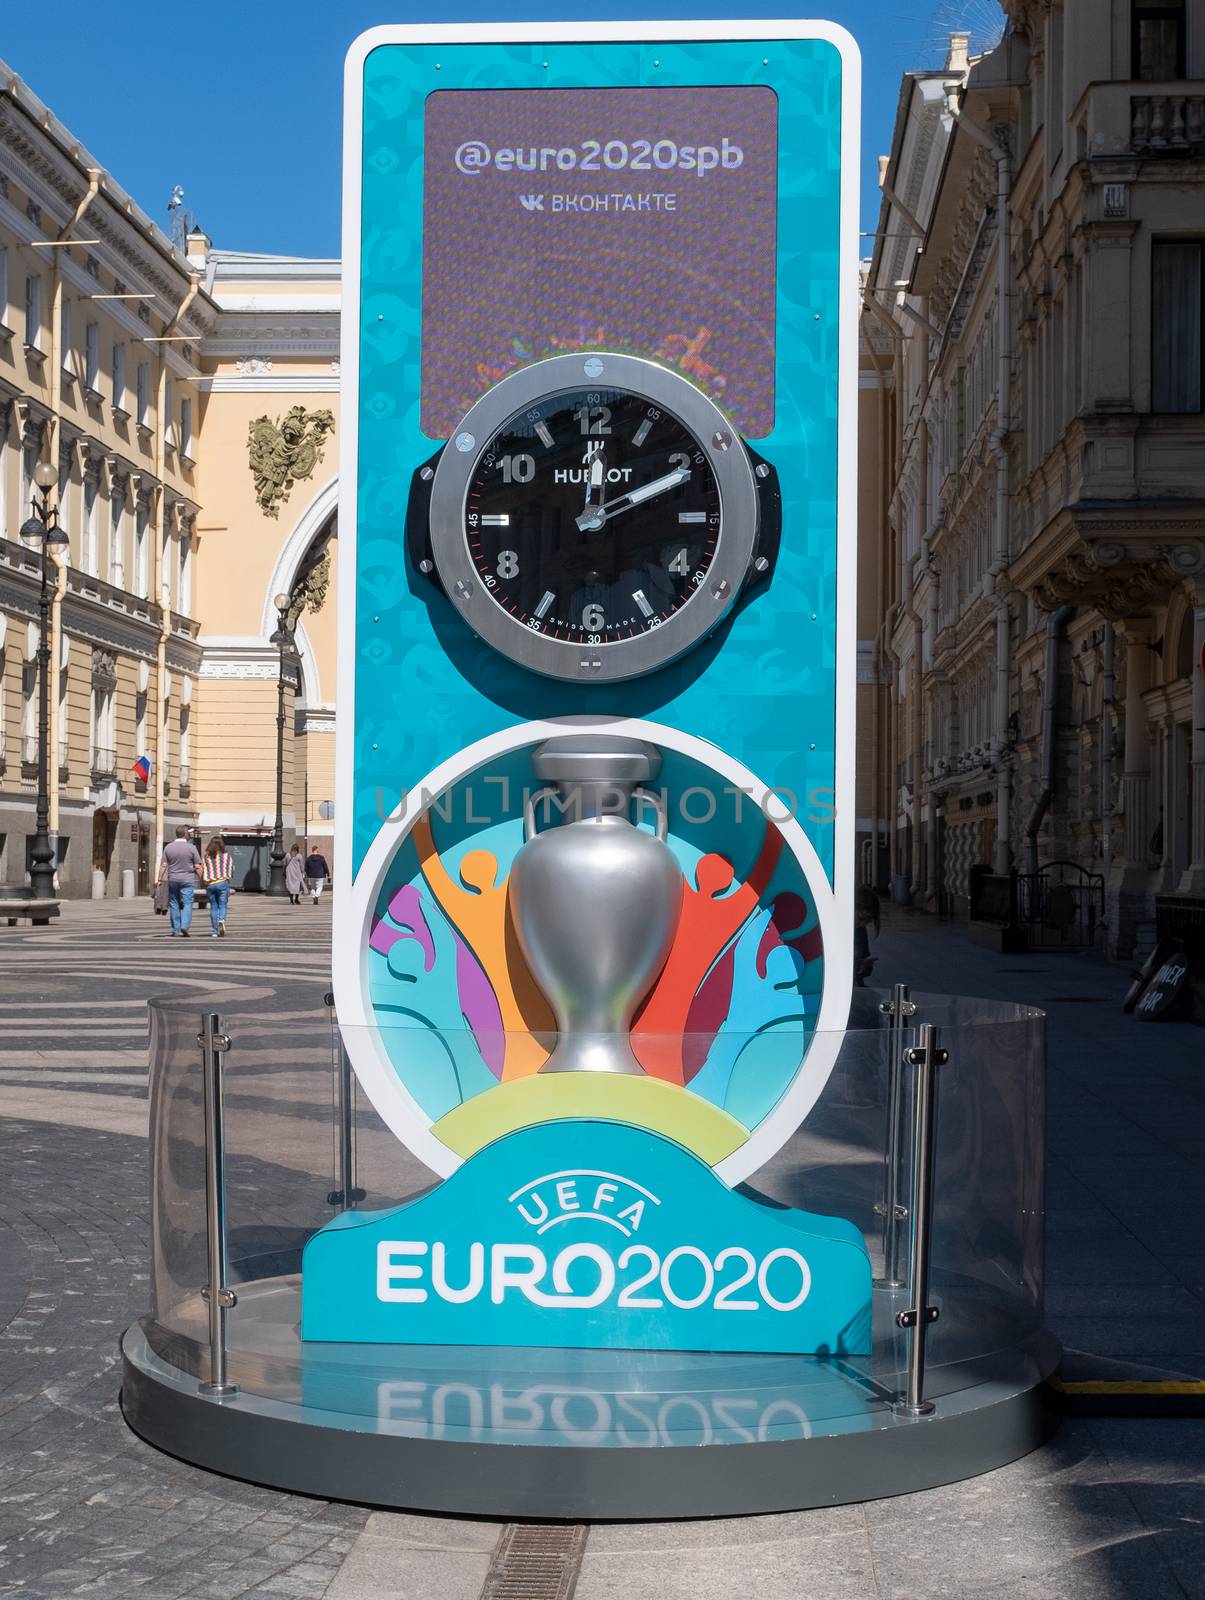 June 12, 2020, Saint Petersburg, Russia; countdown Clock to the start of the European football Championship 2020, postponed due to the coronavirus pandemic to the summer of 2021.